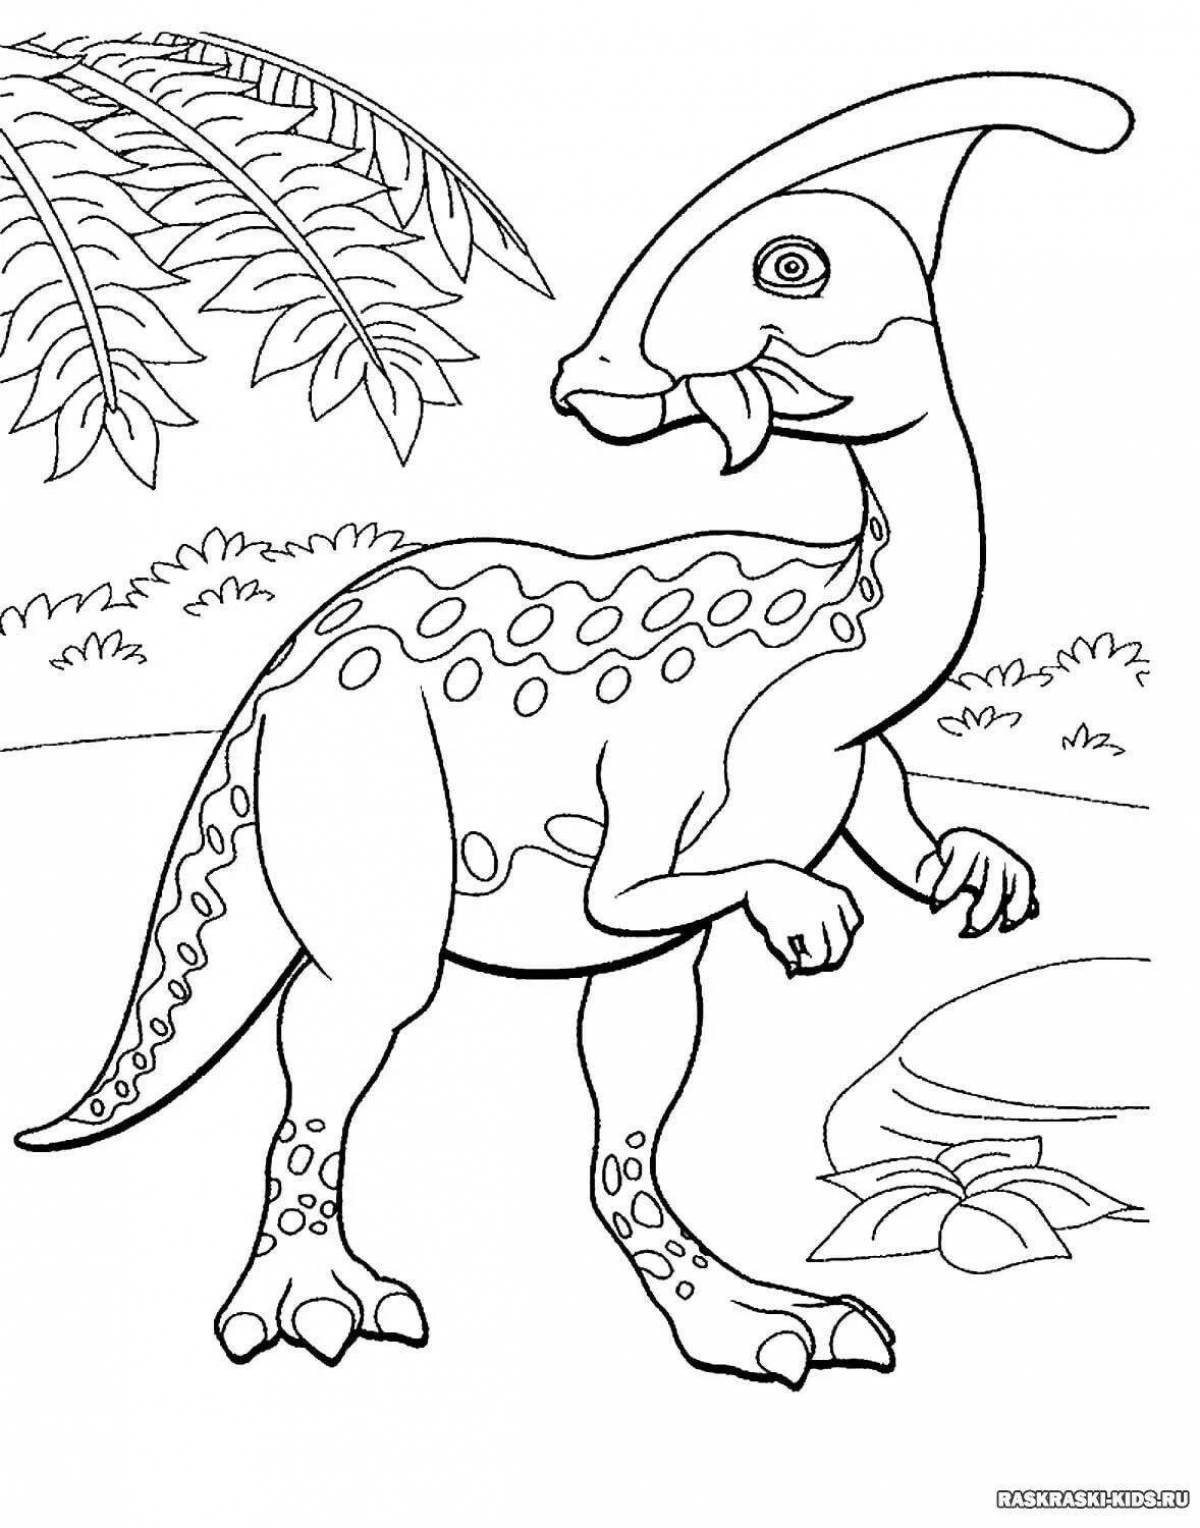 Great dinosaur coloring book